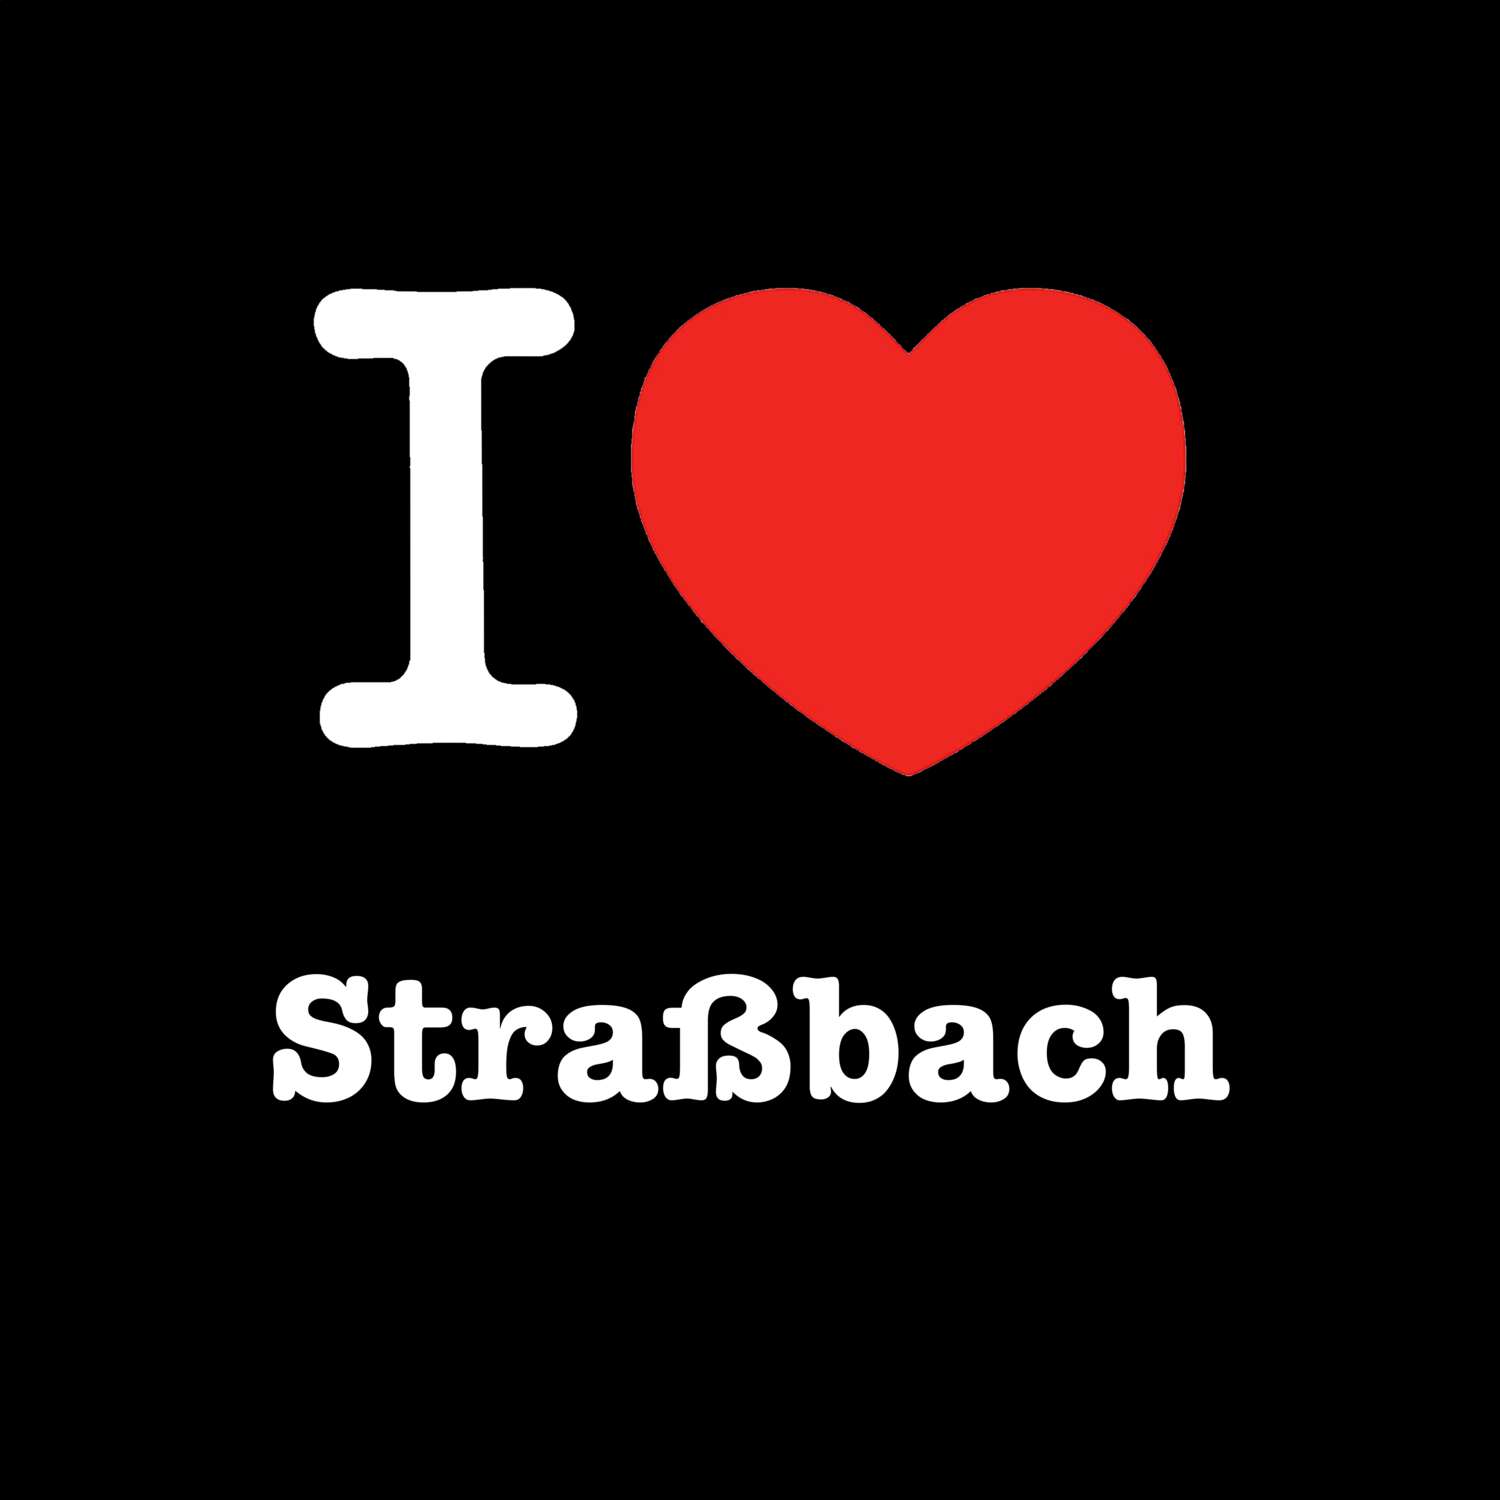 Straßbach T-Shirt »I love«